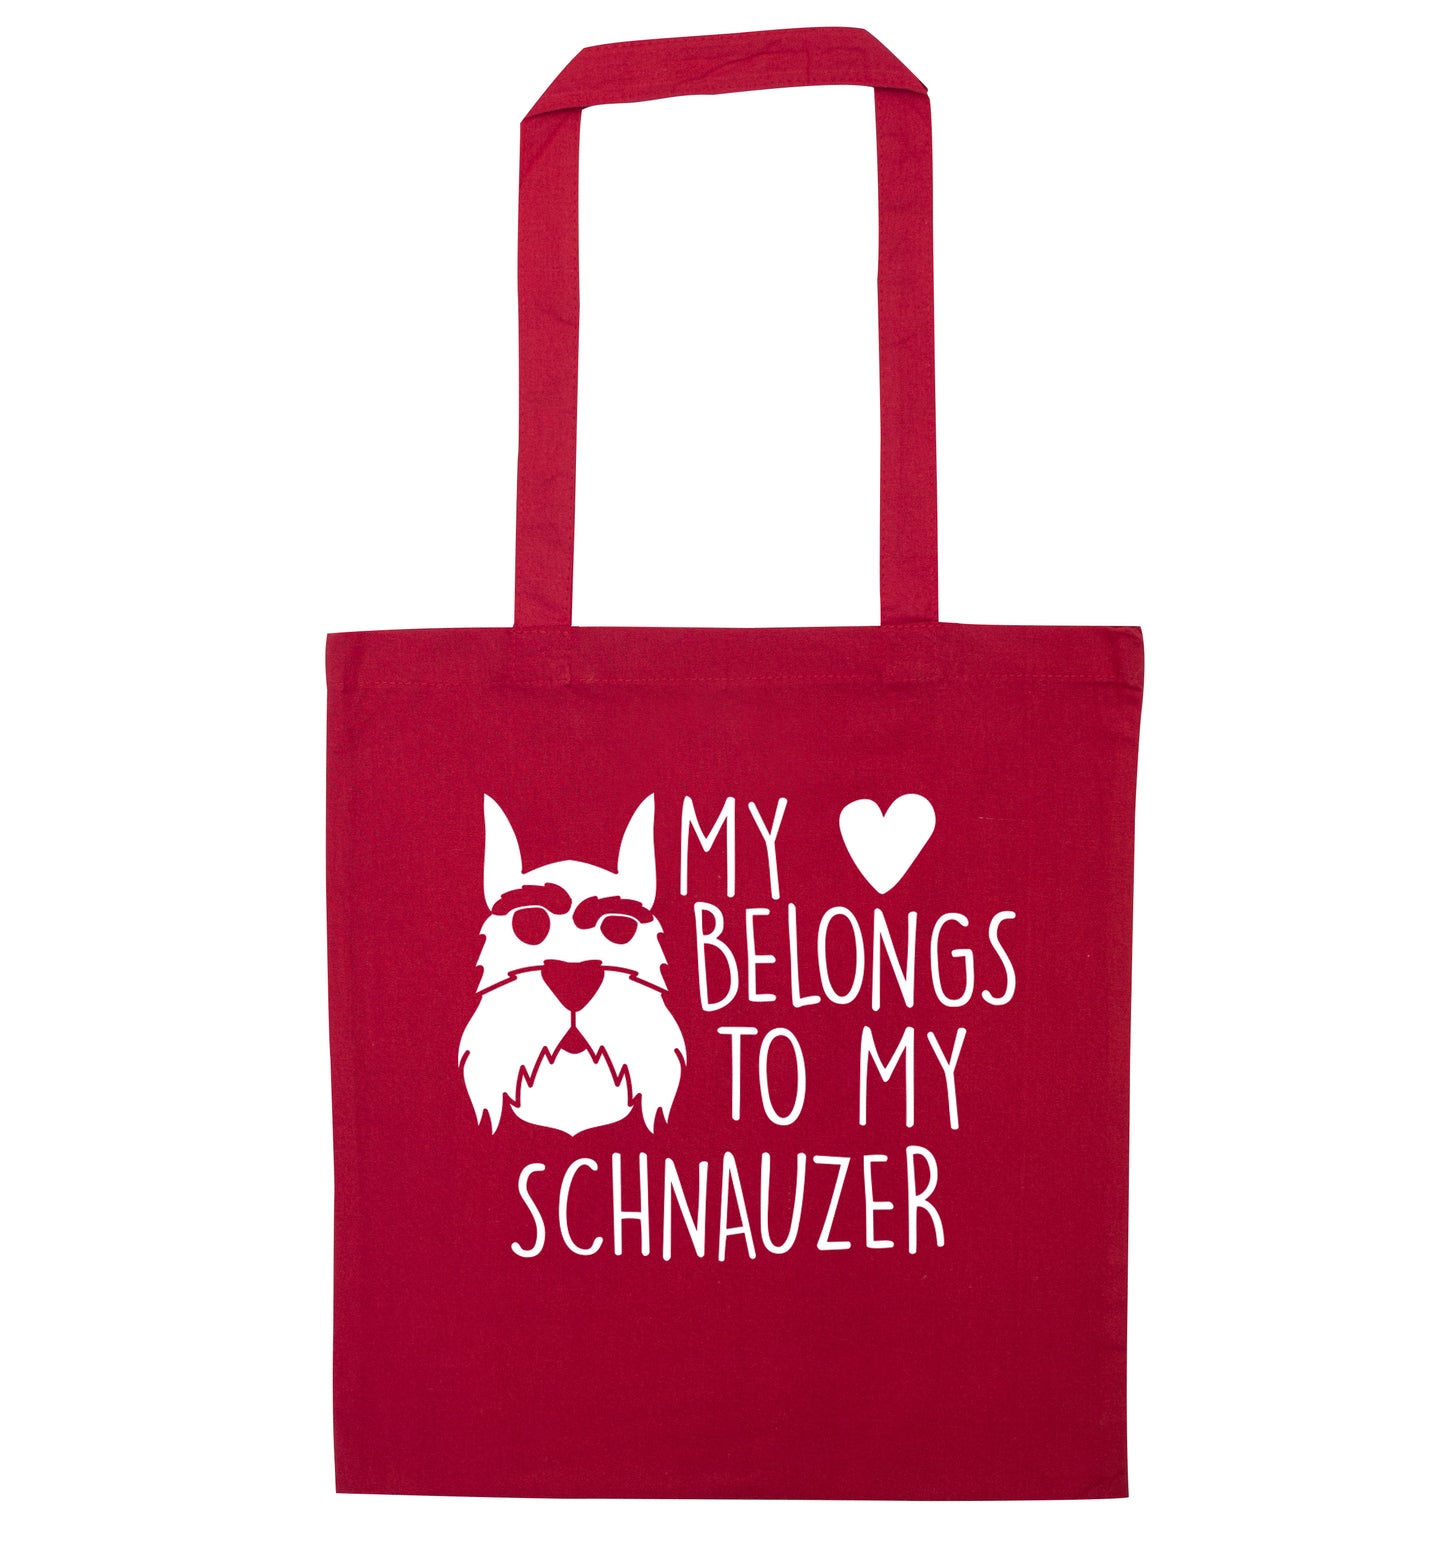 My heart belongs to my schnauzer red tote bag